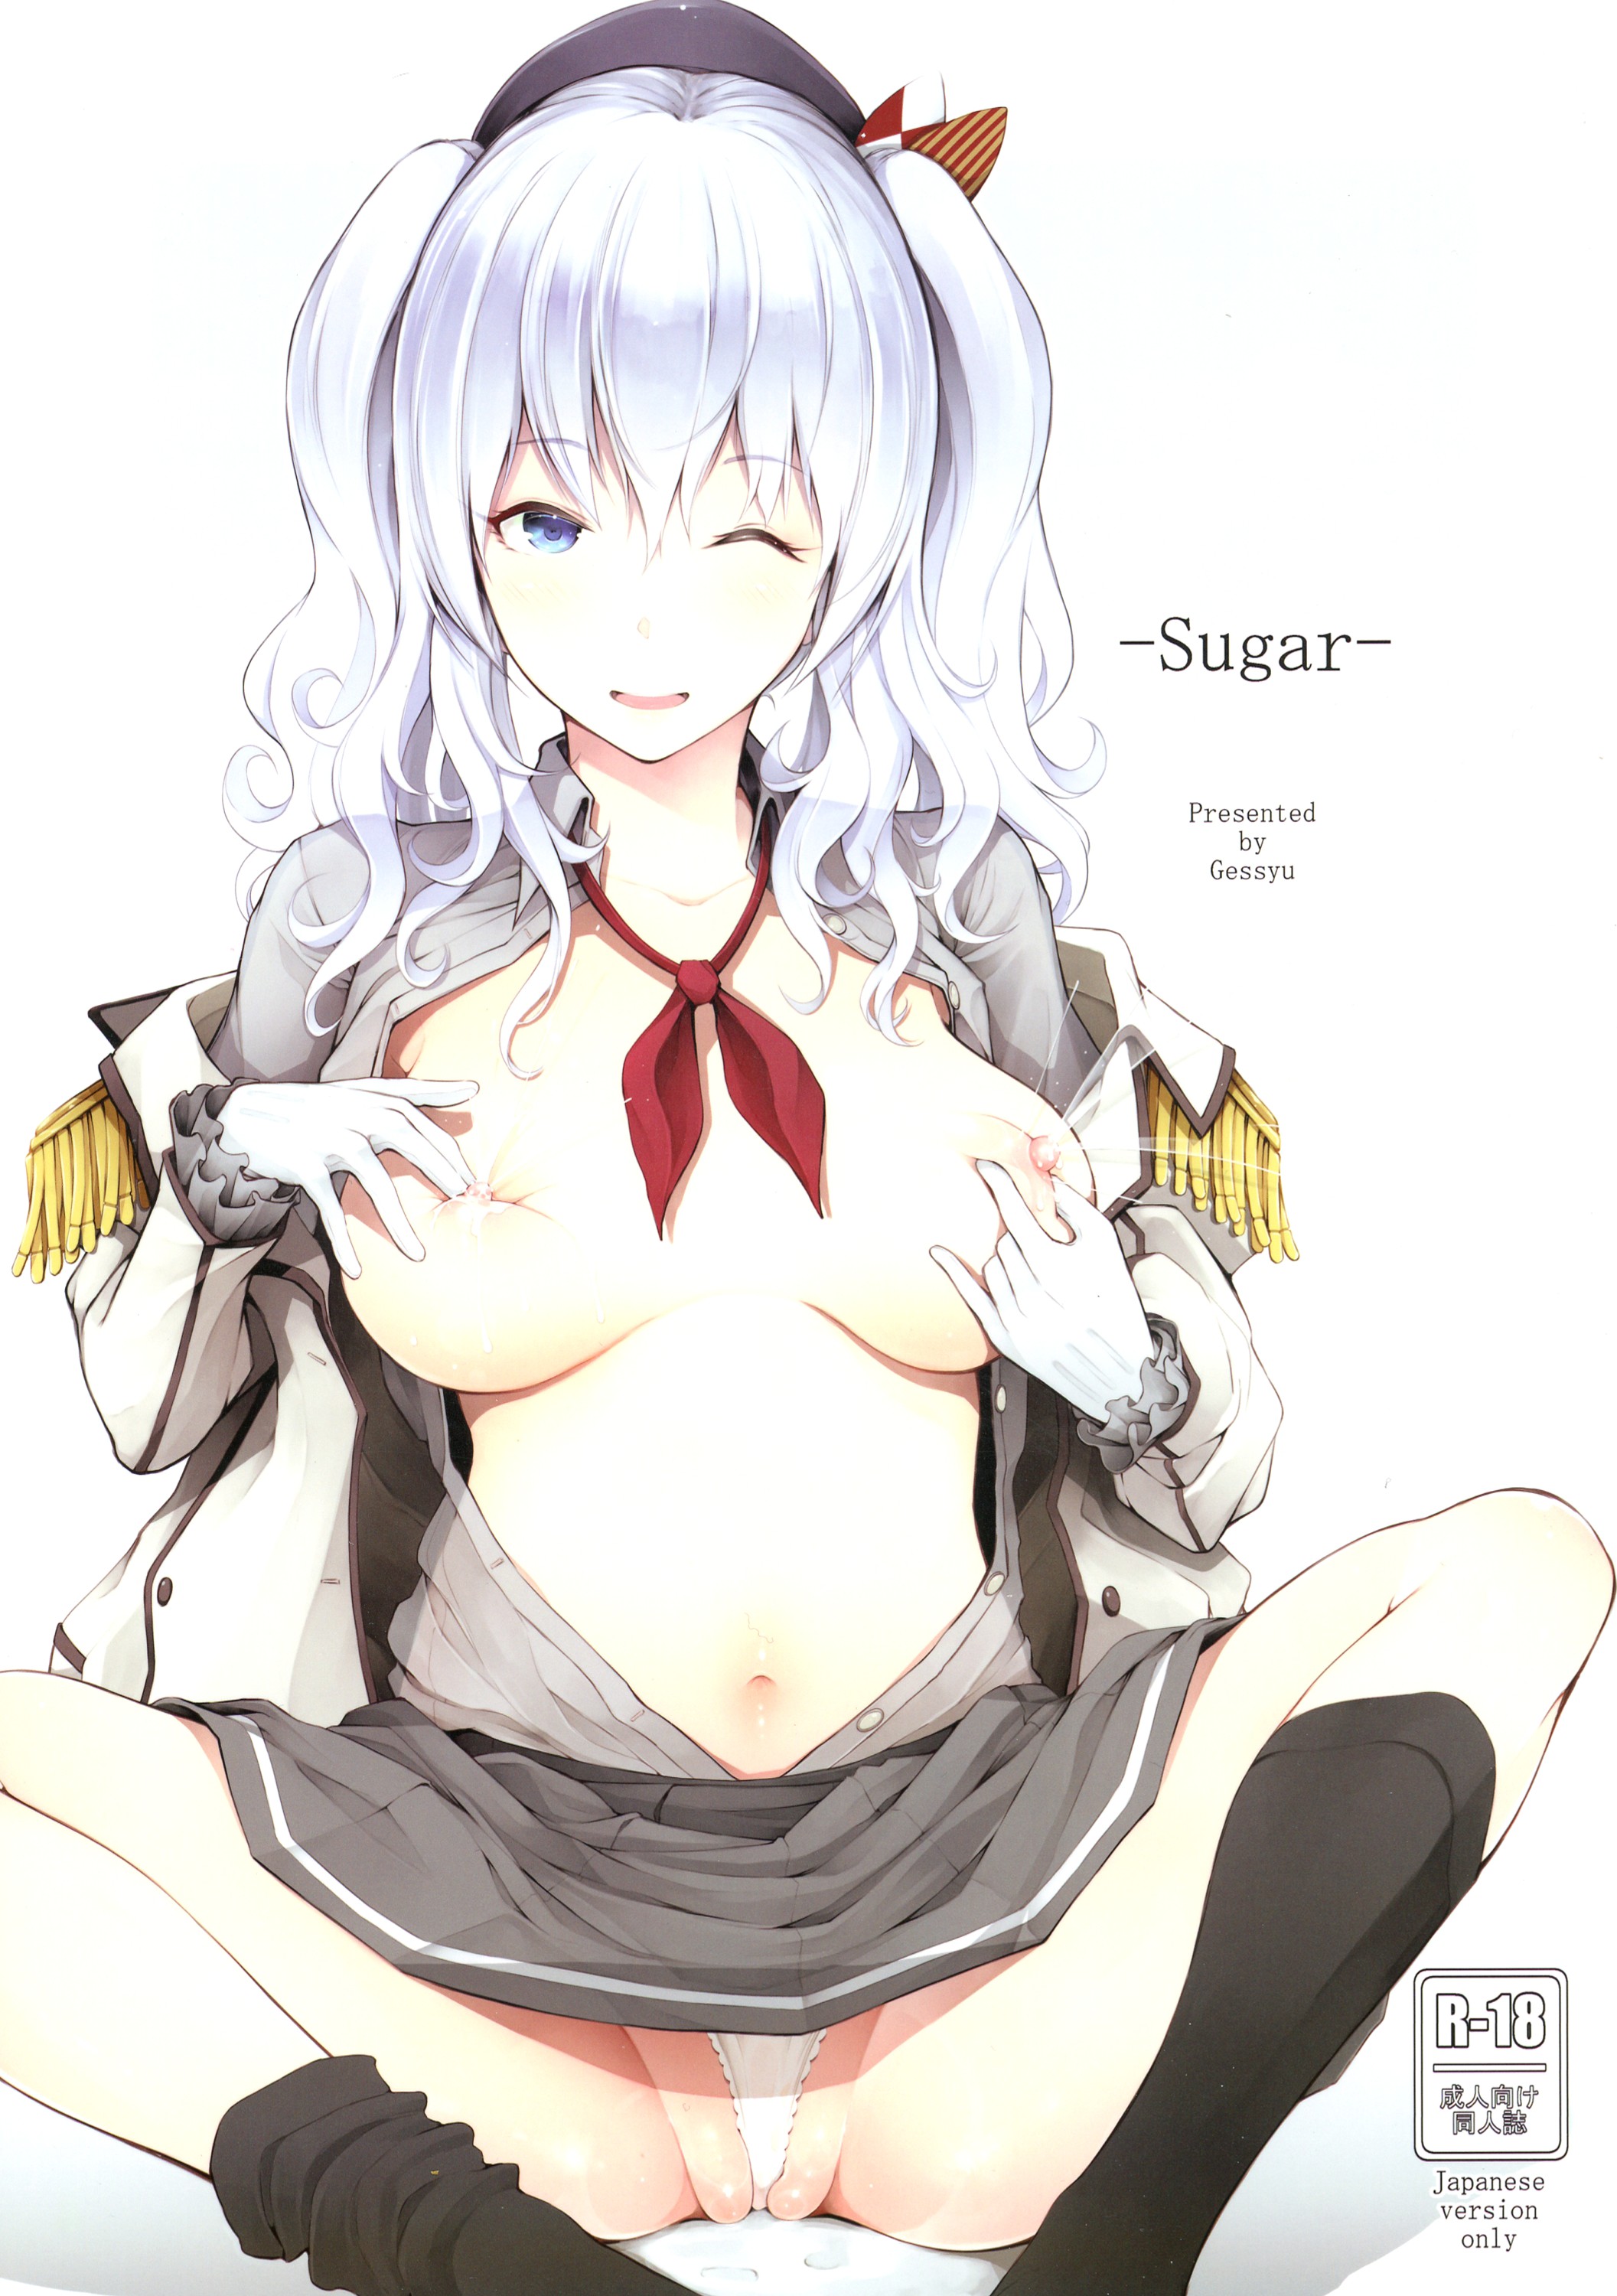 Gessyu - Sugar Japanese Hentai Comic